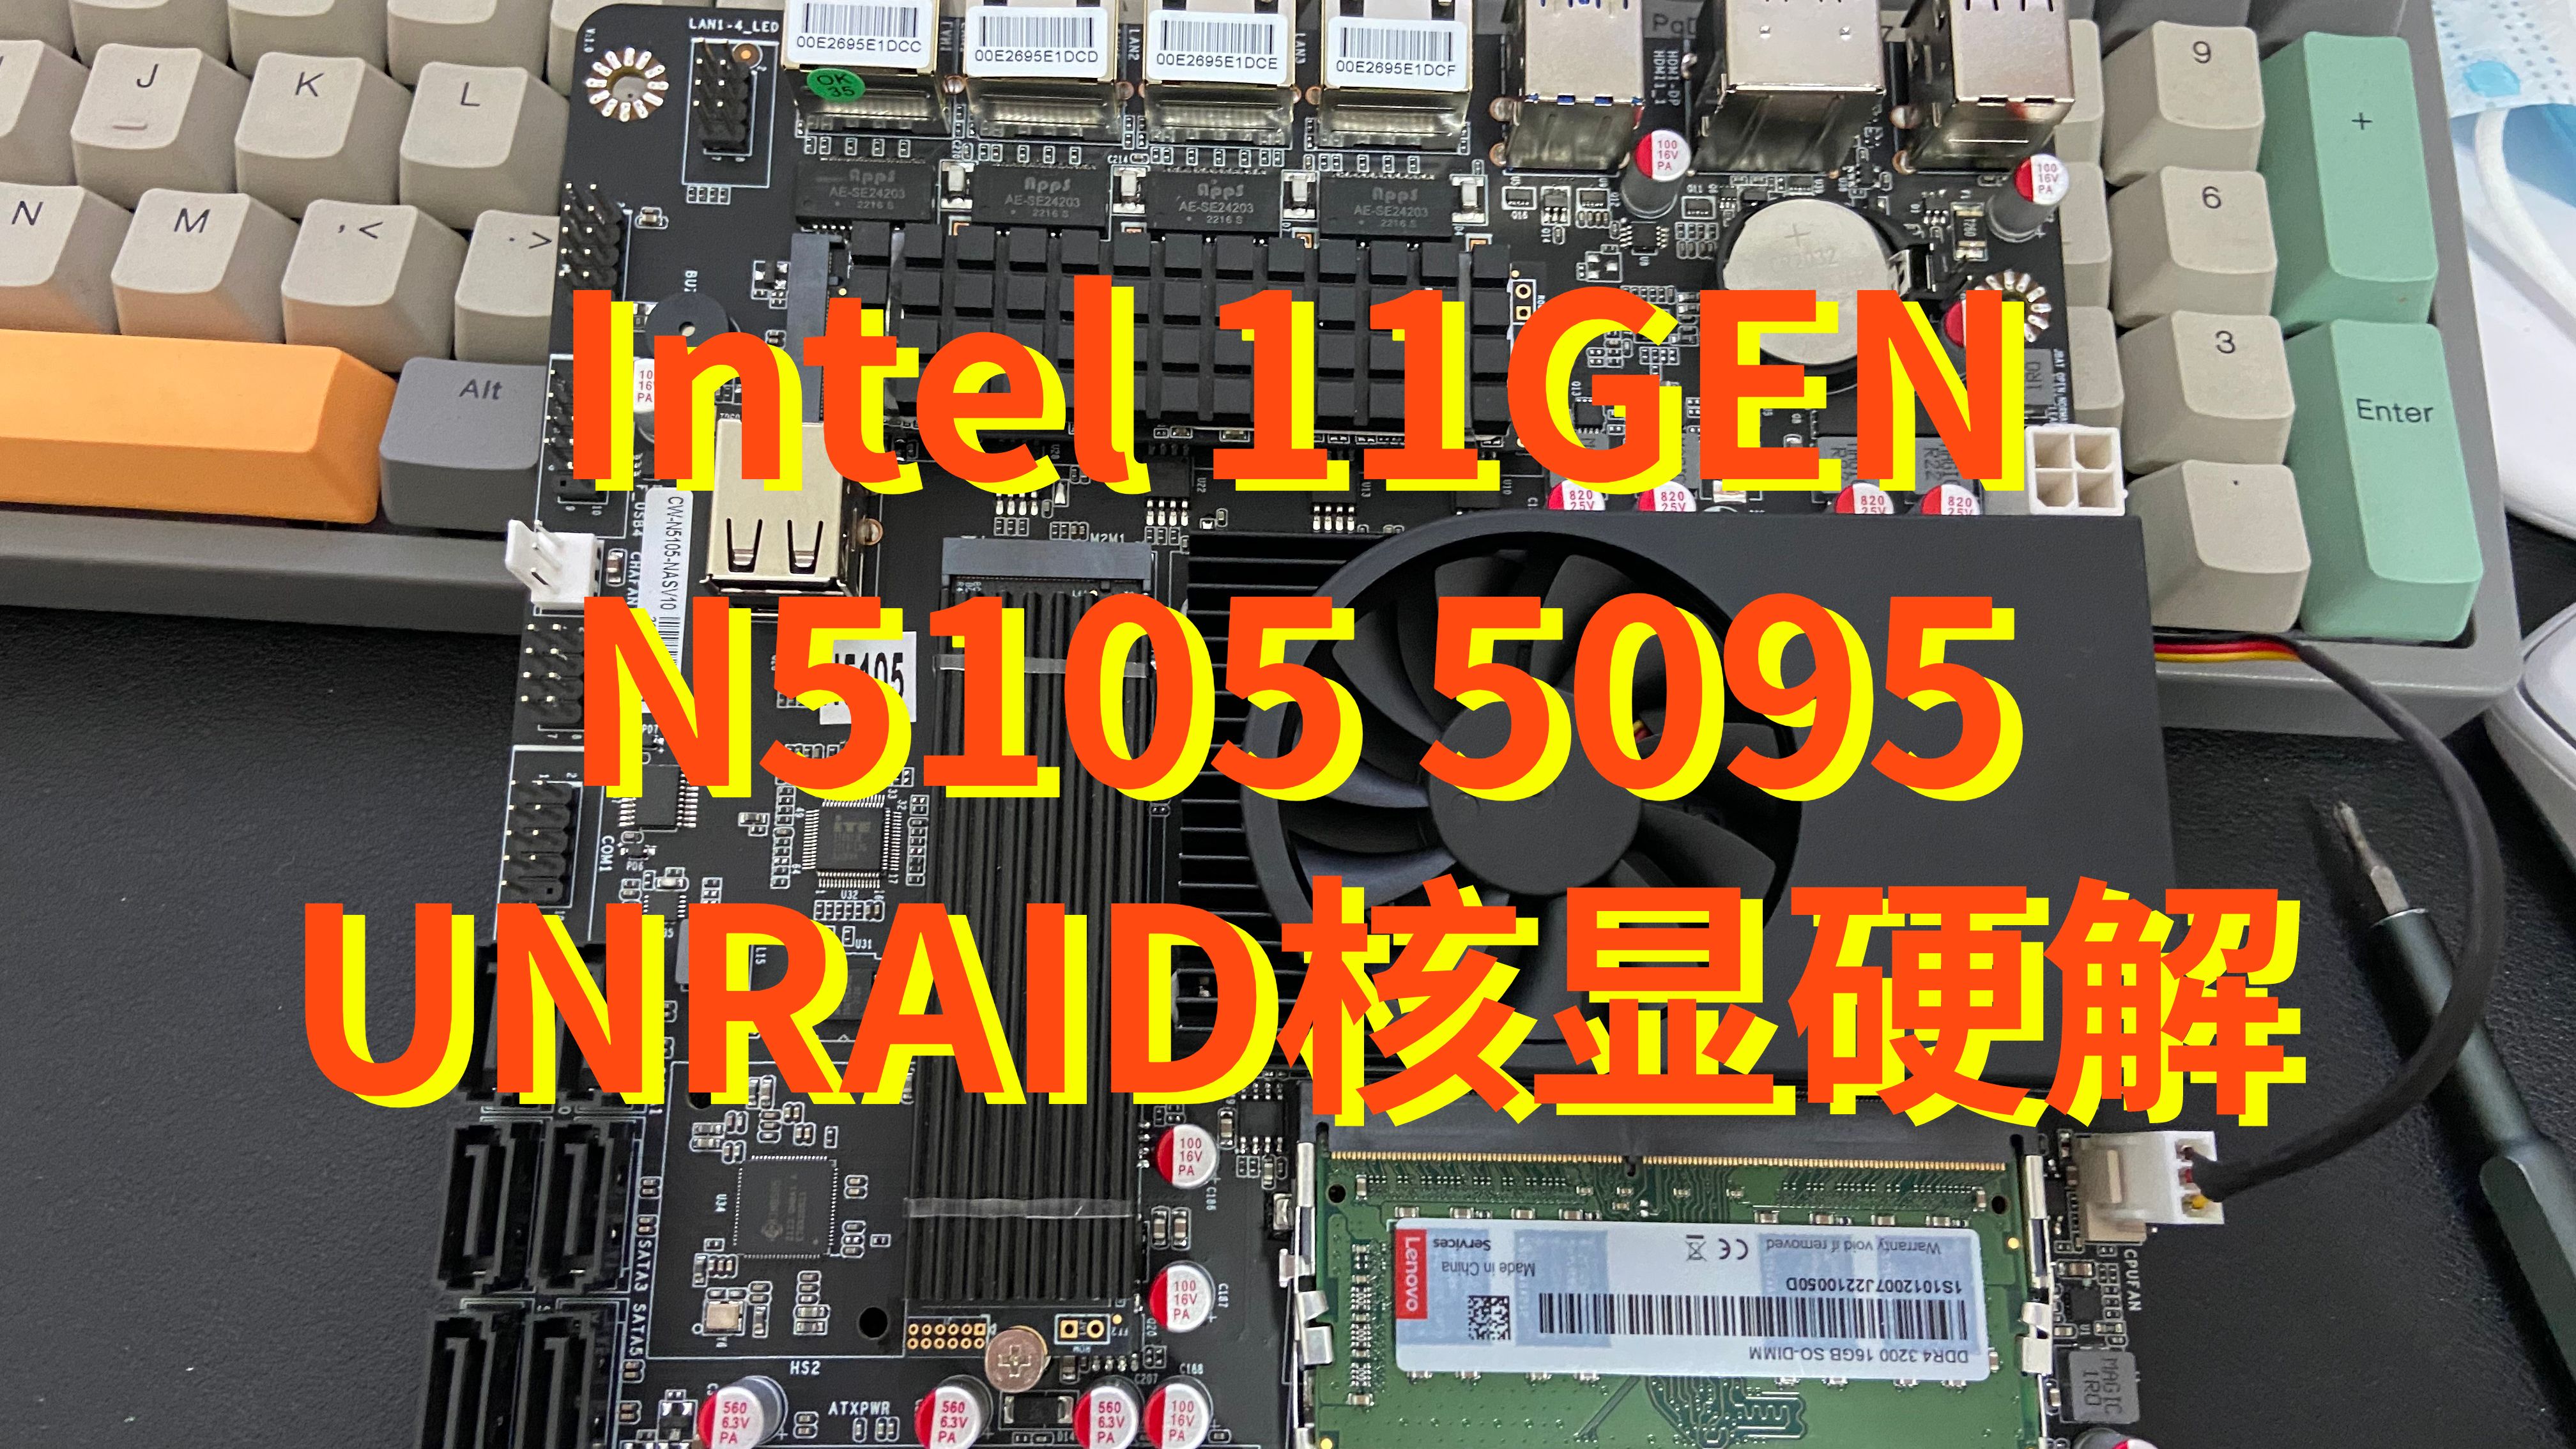 UNRAID Intel 11GEN英特尔11代N5105/5095核显Plex/Emby/Jellyfin硬解 